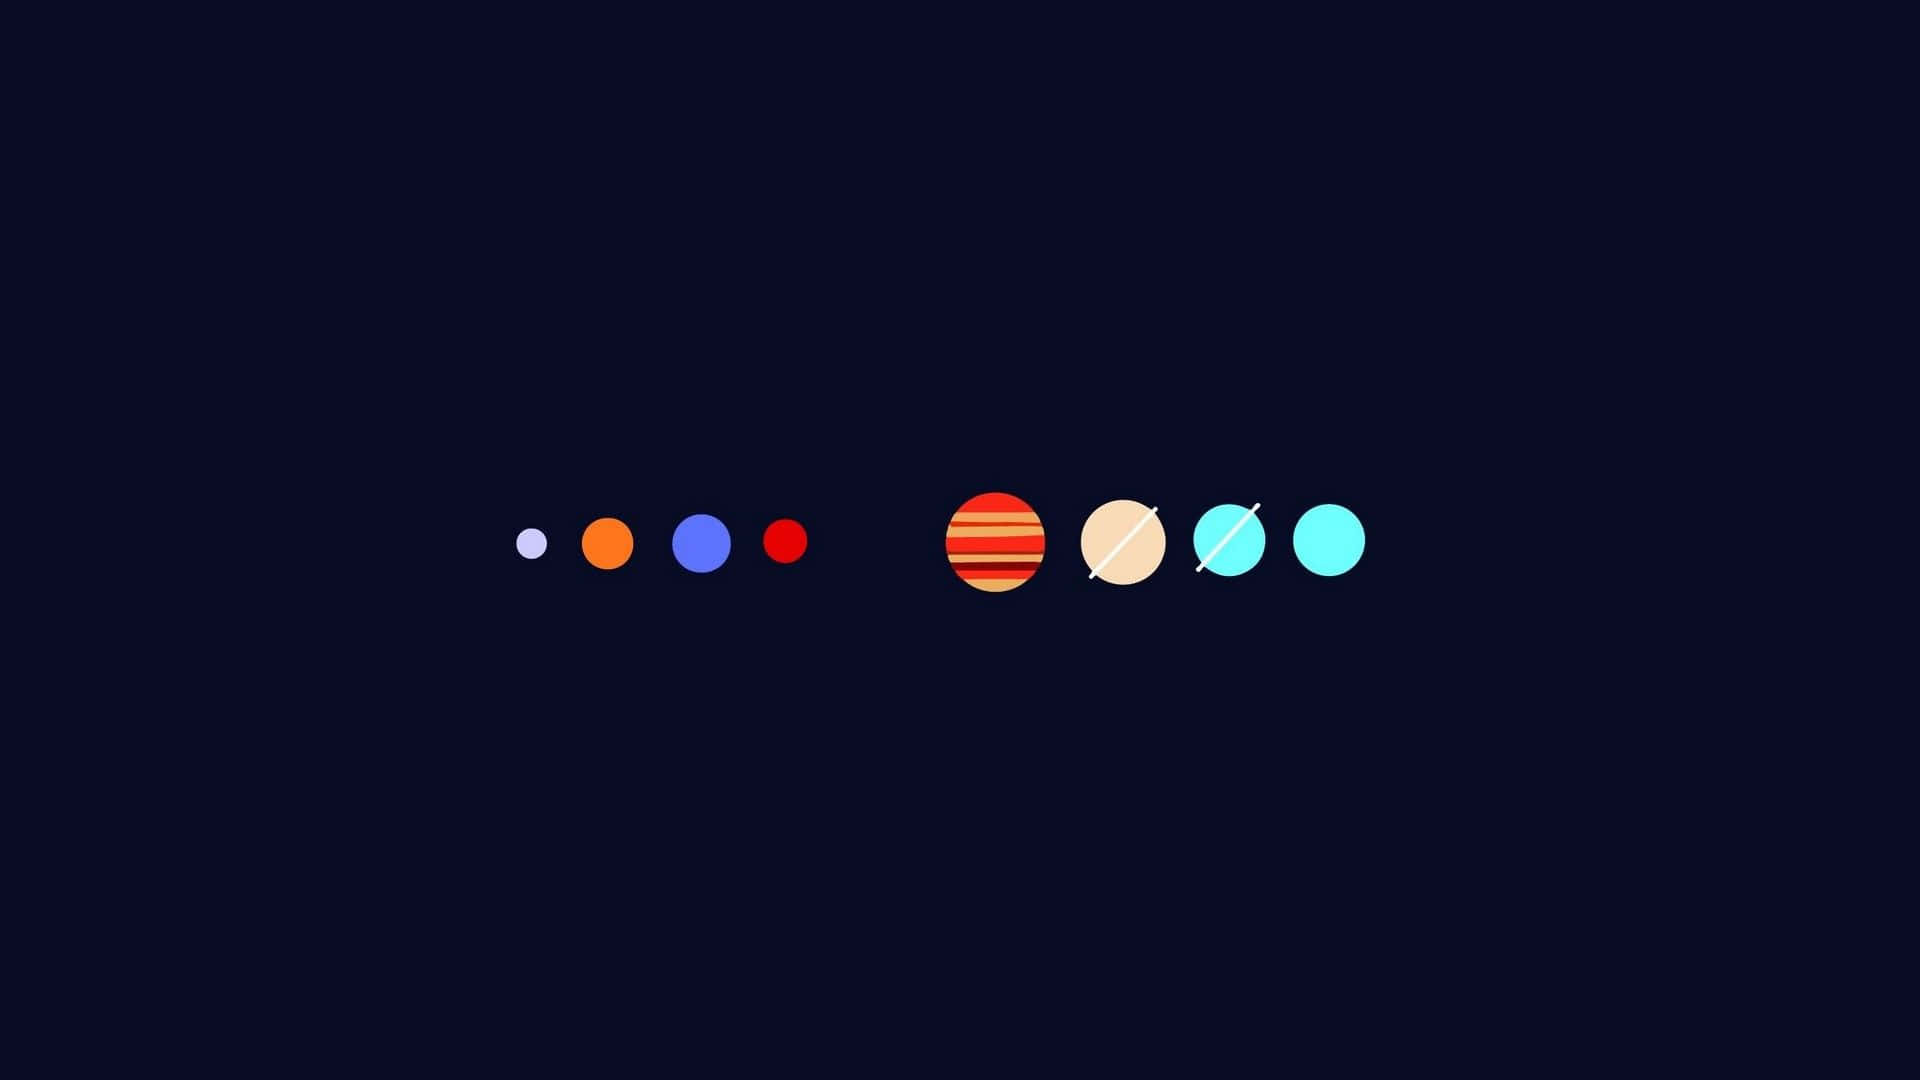 Best Minimal Solar System Background